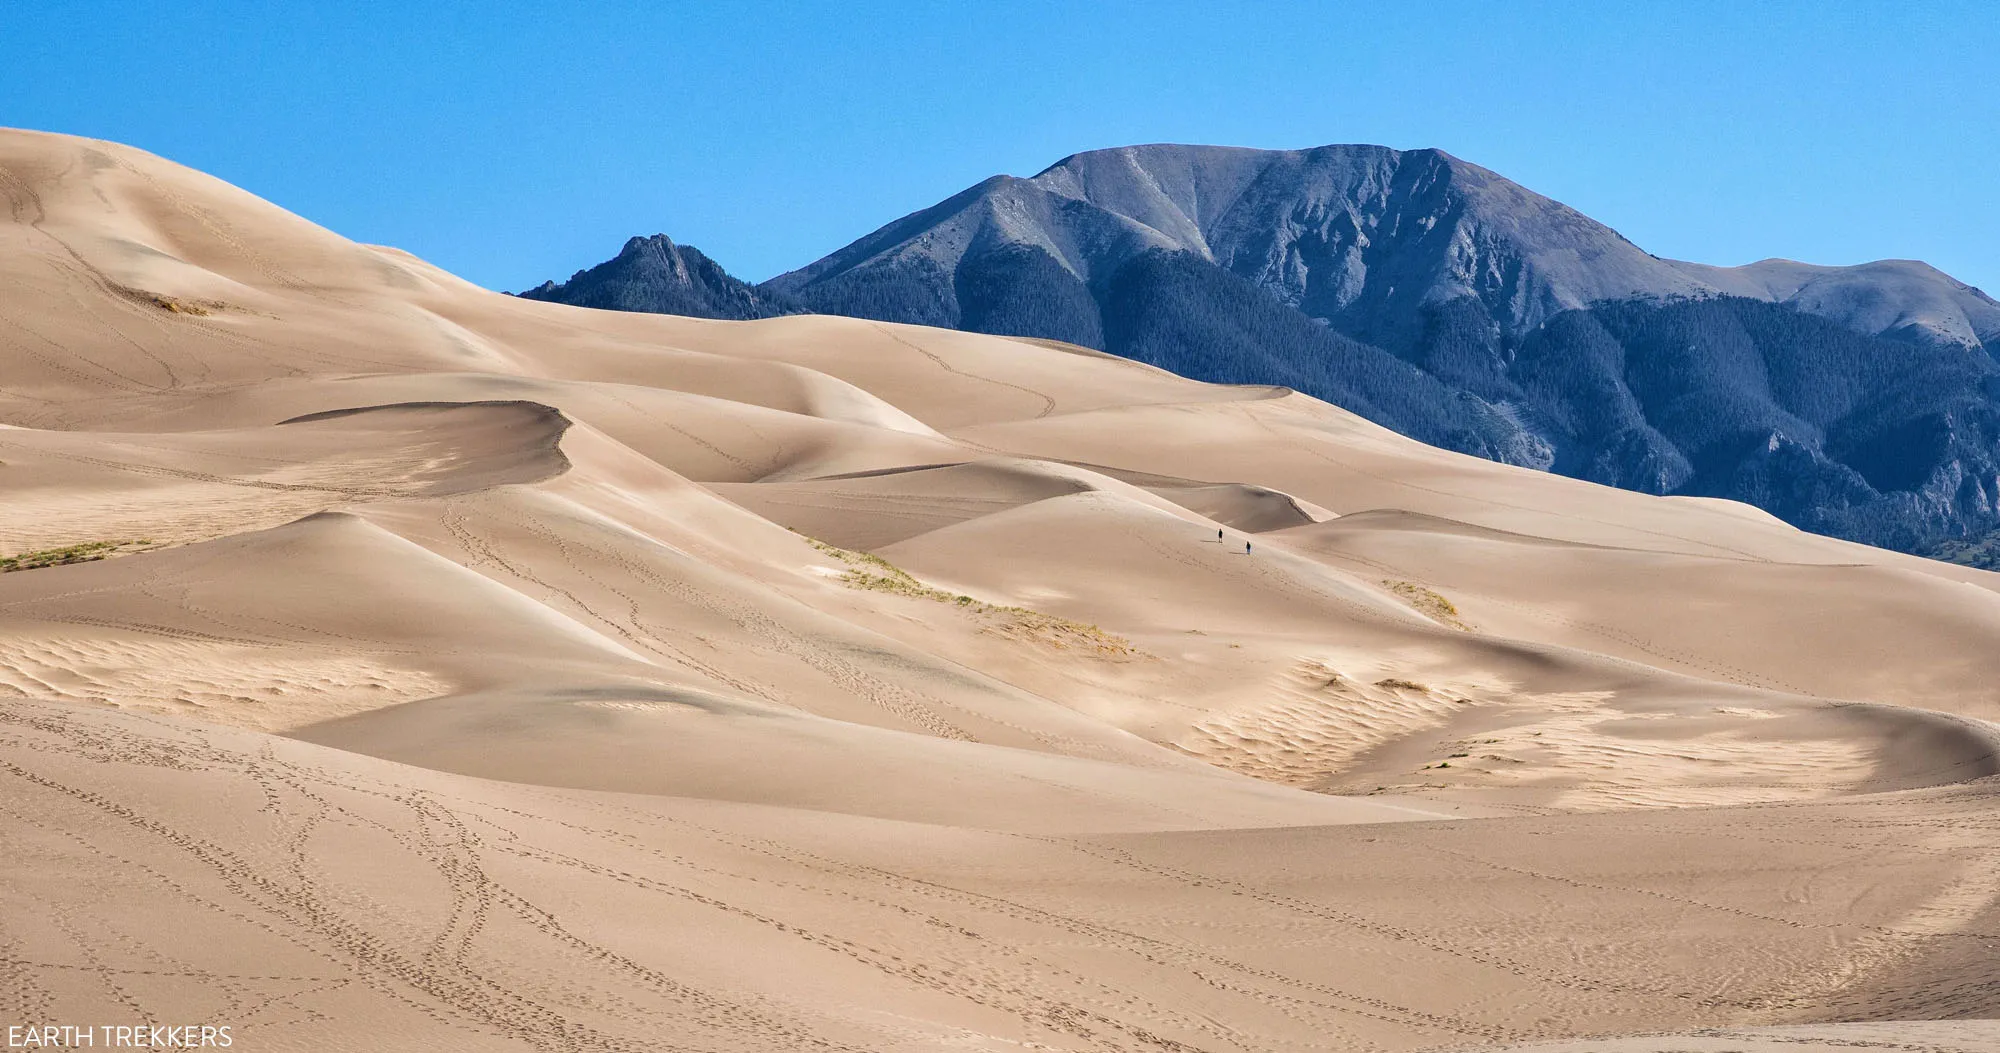 Colorado's Great Sand Dunes National Park